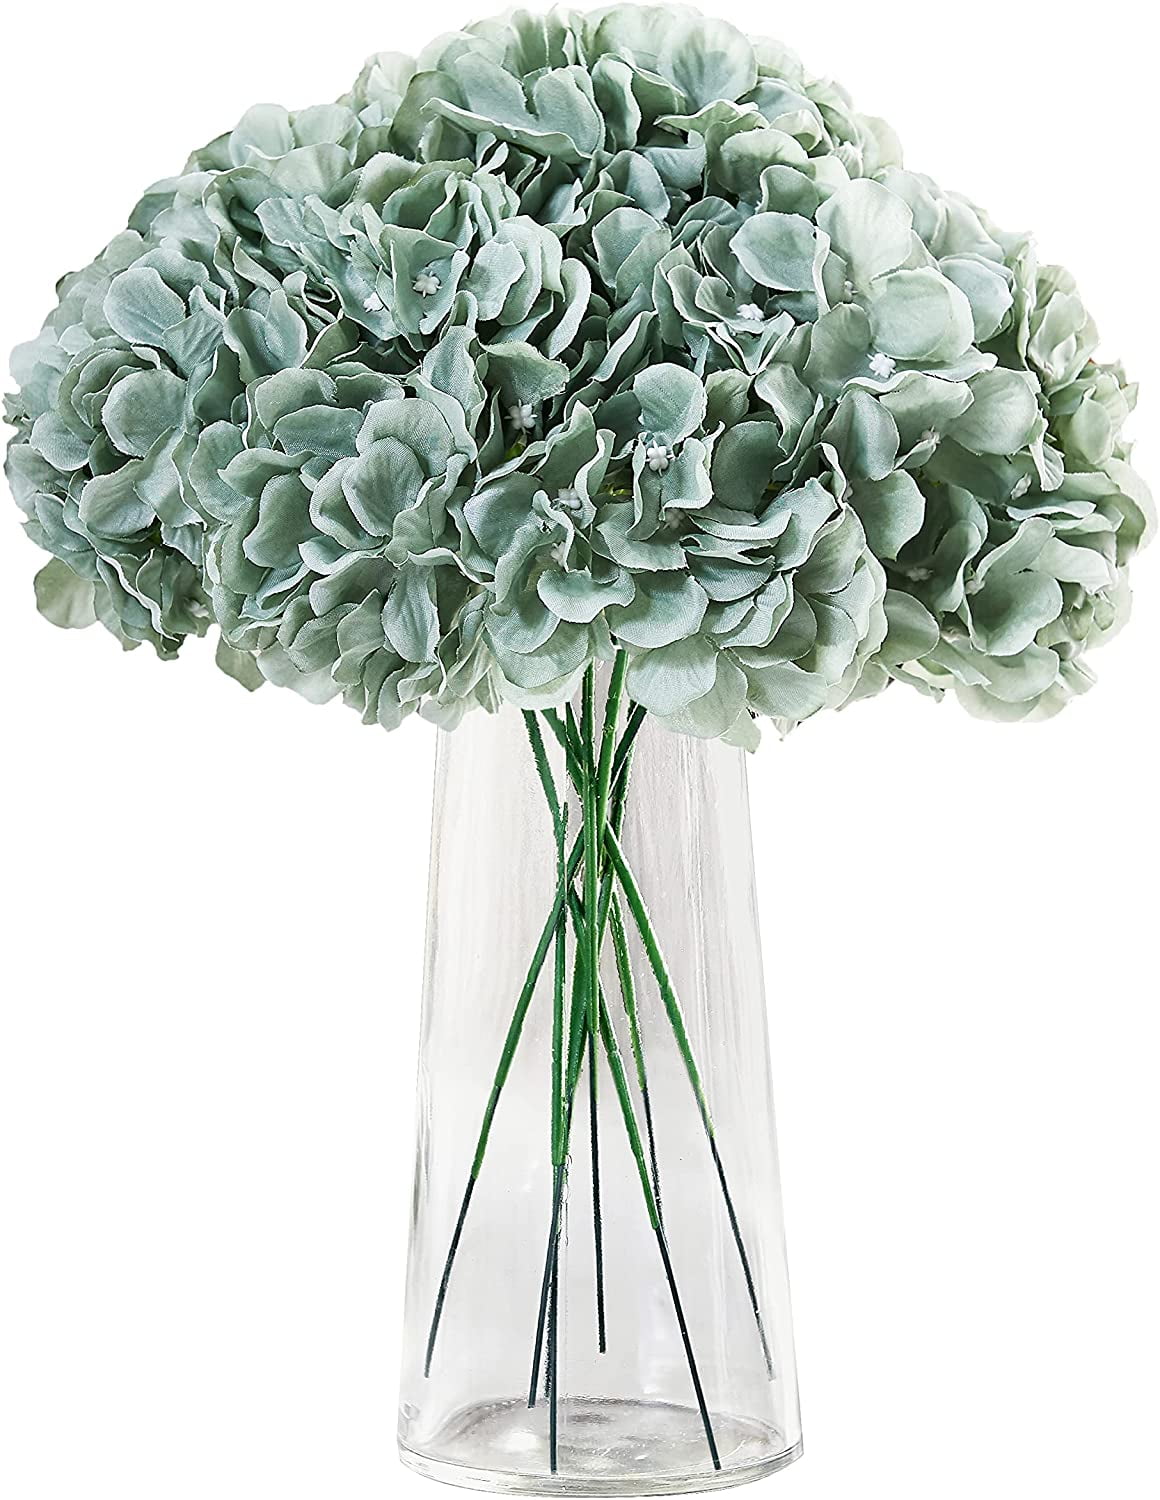 Silk Hydrangea Head Flower Arrangement Bridal Bouquet Wedding Décor,Green 